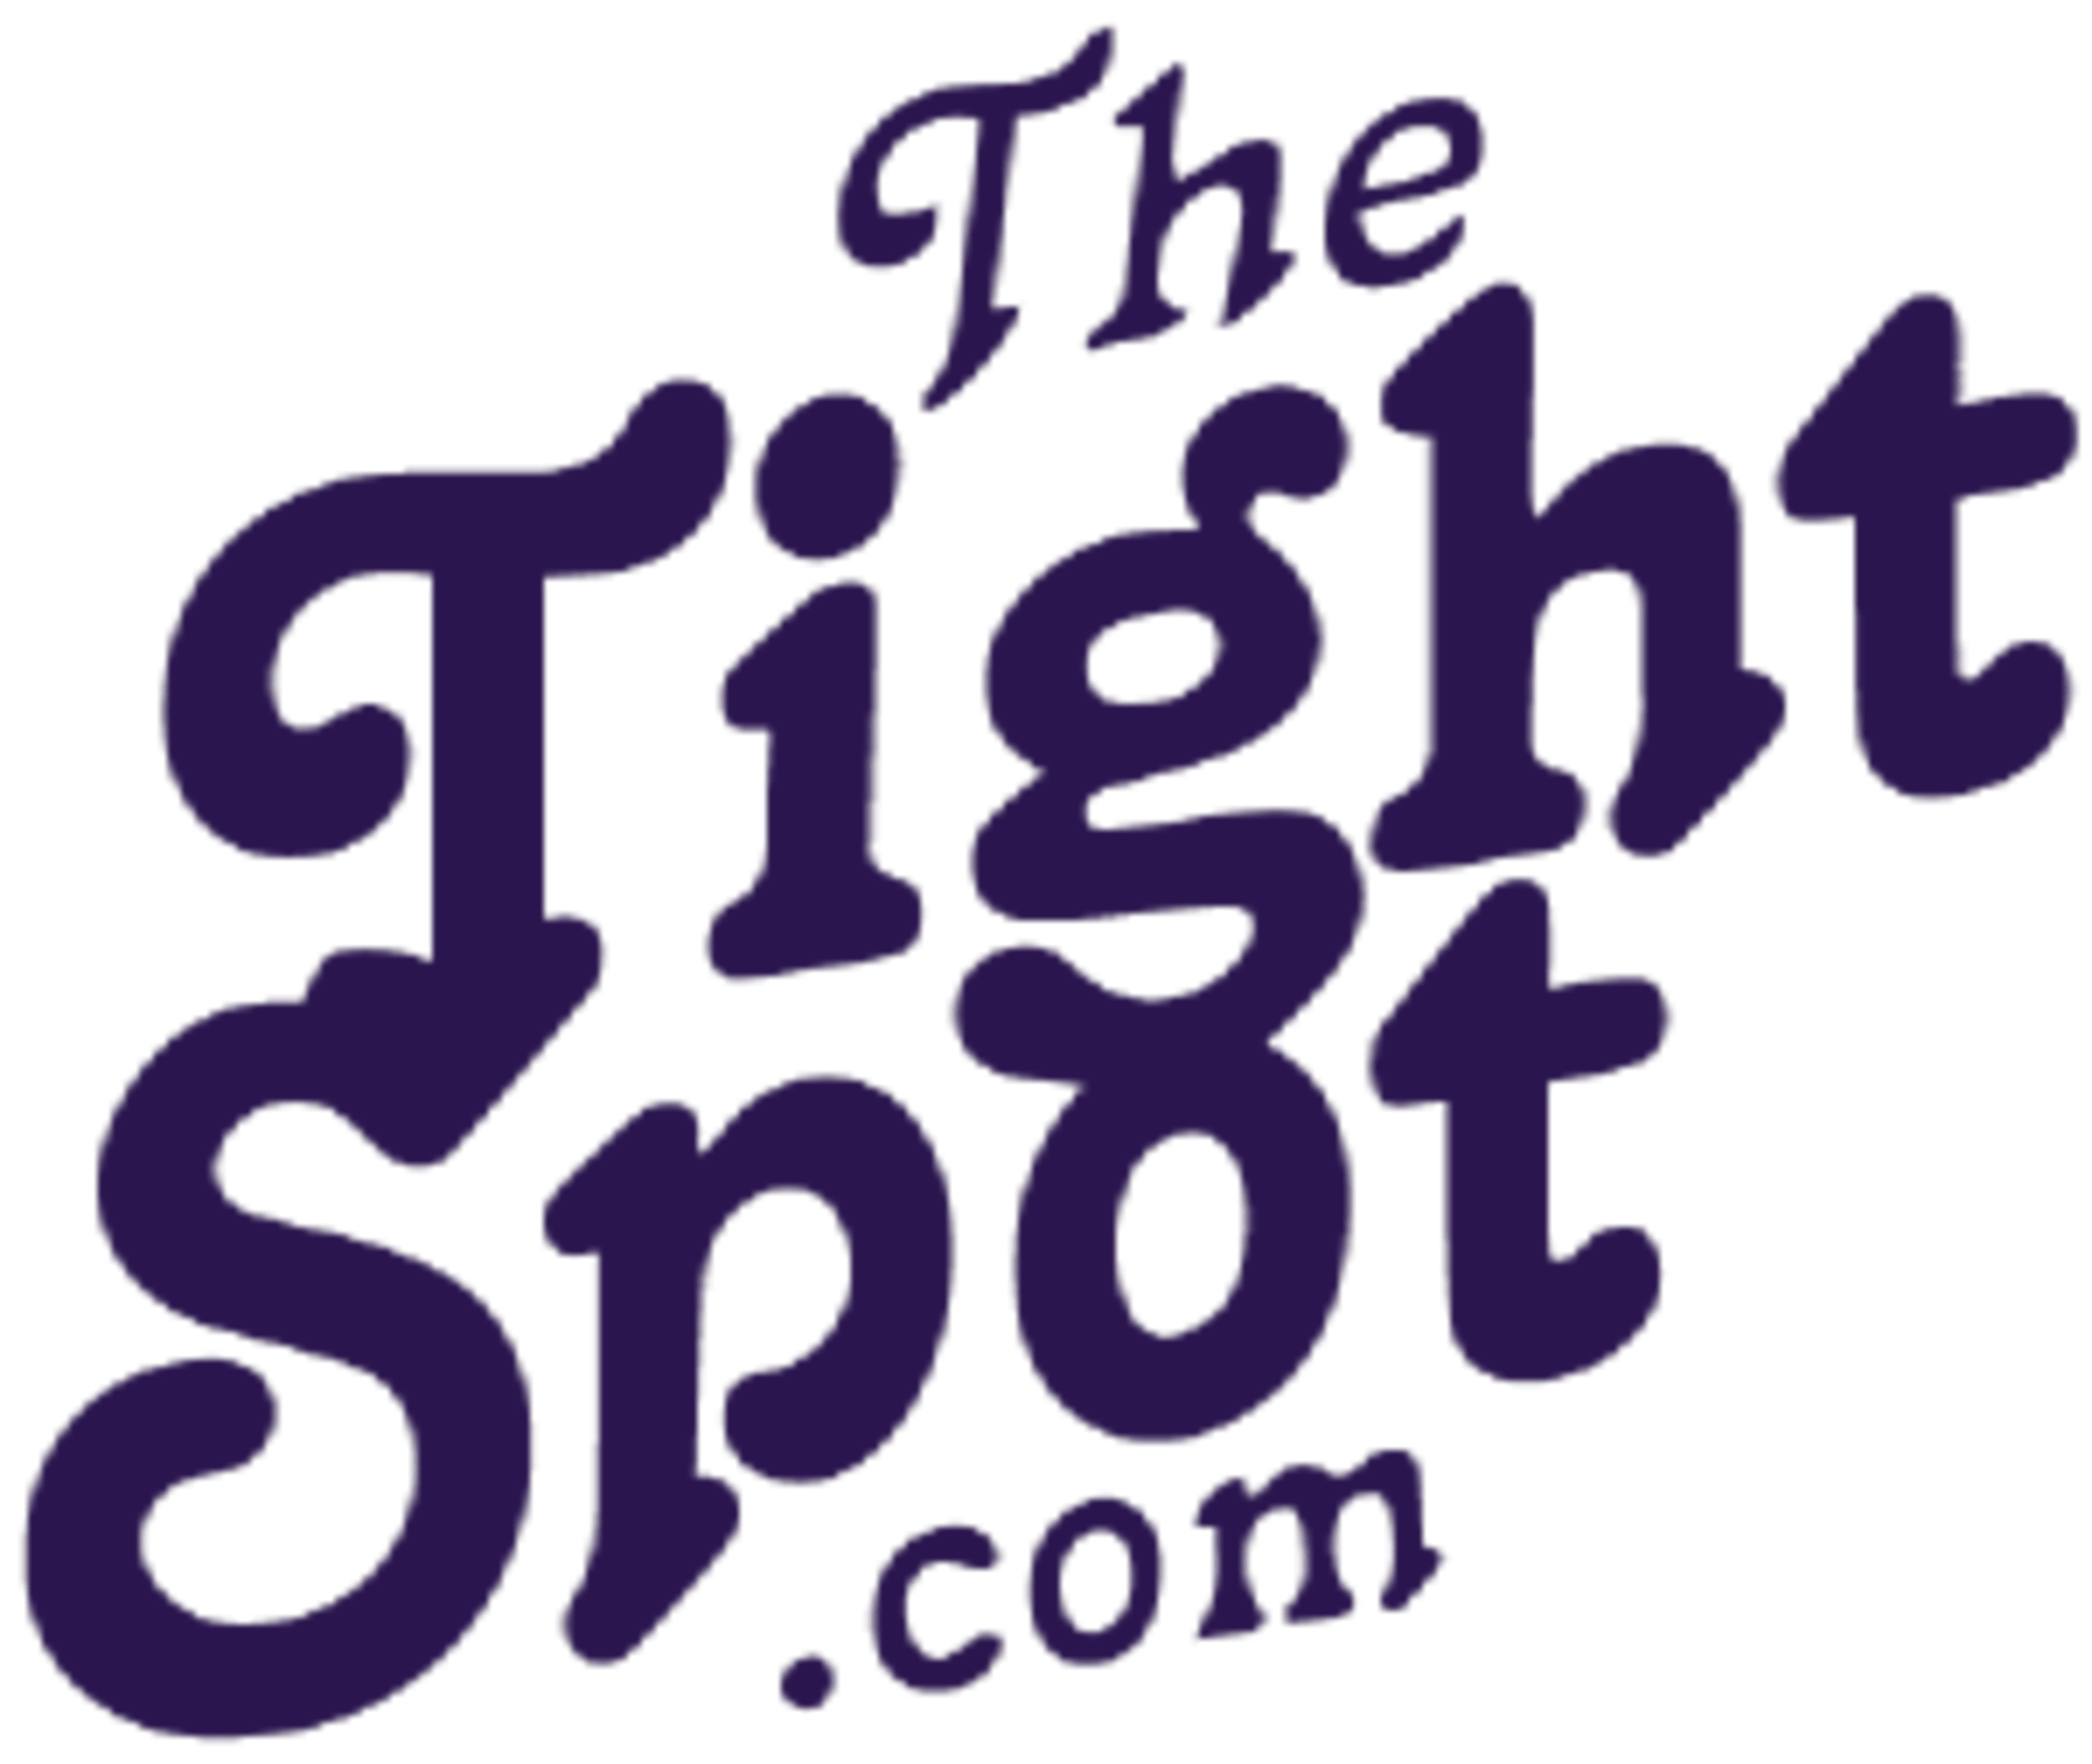 The Tight Spot Code